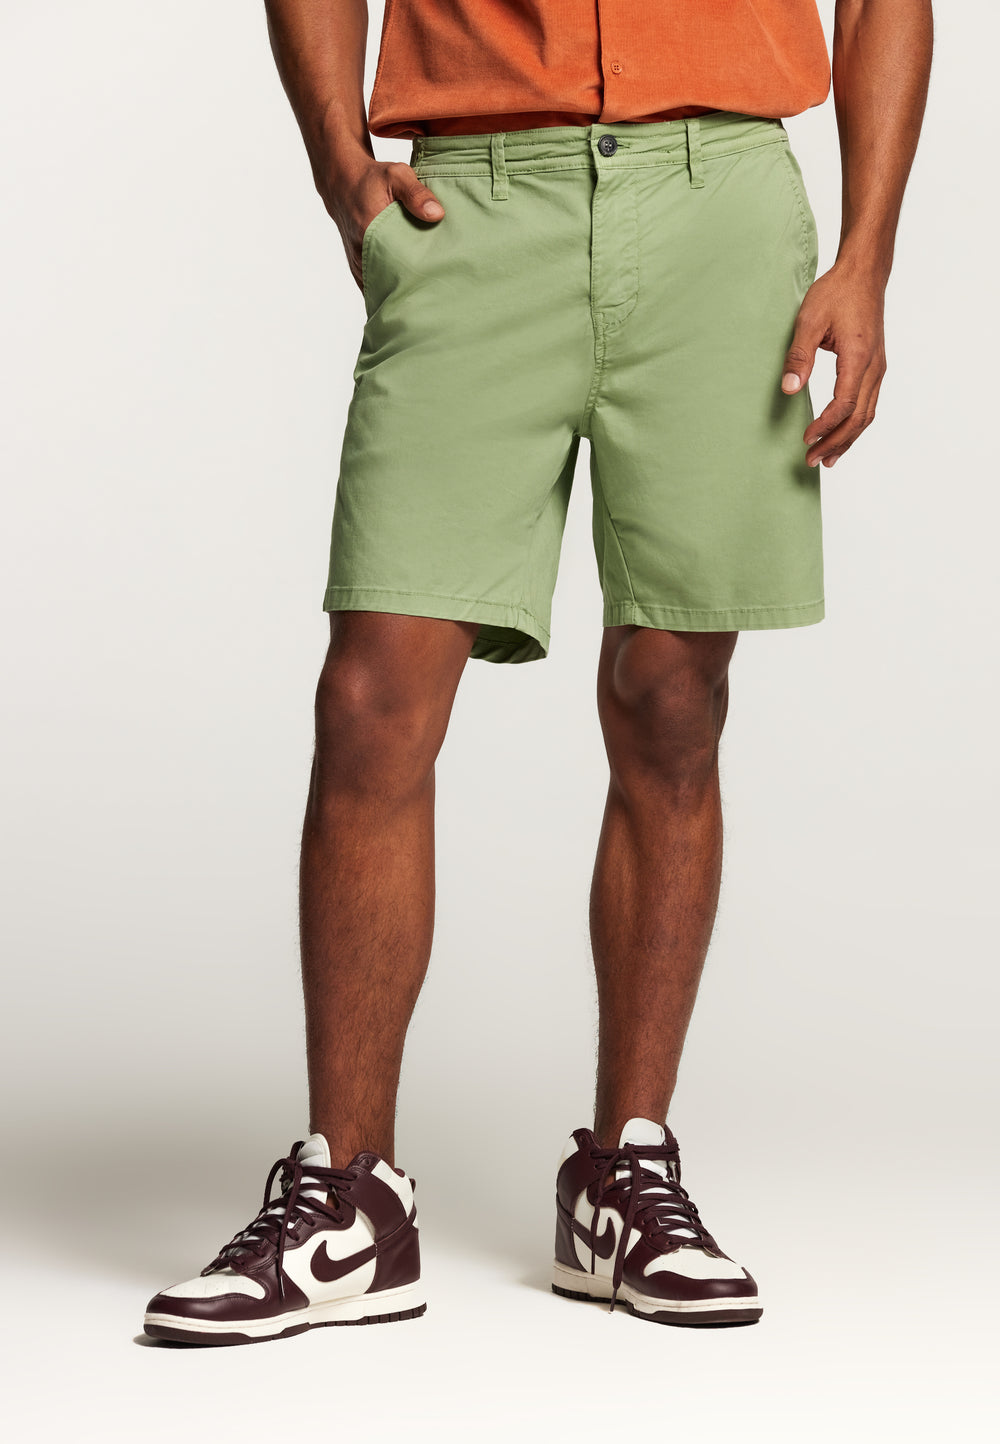 Shiwi Sweat Shorts Light Green 5100210318-772 order online